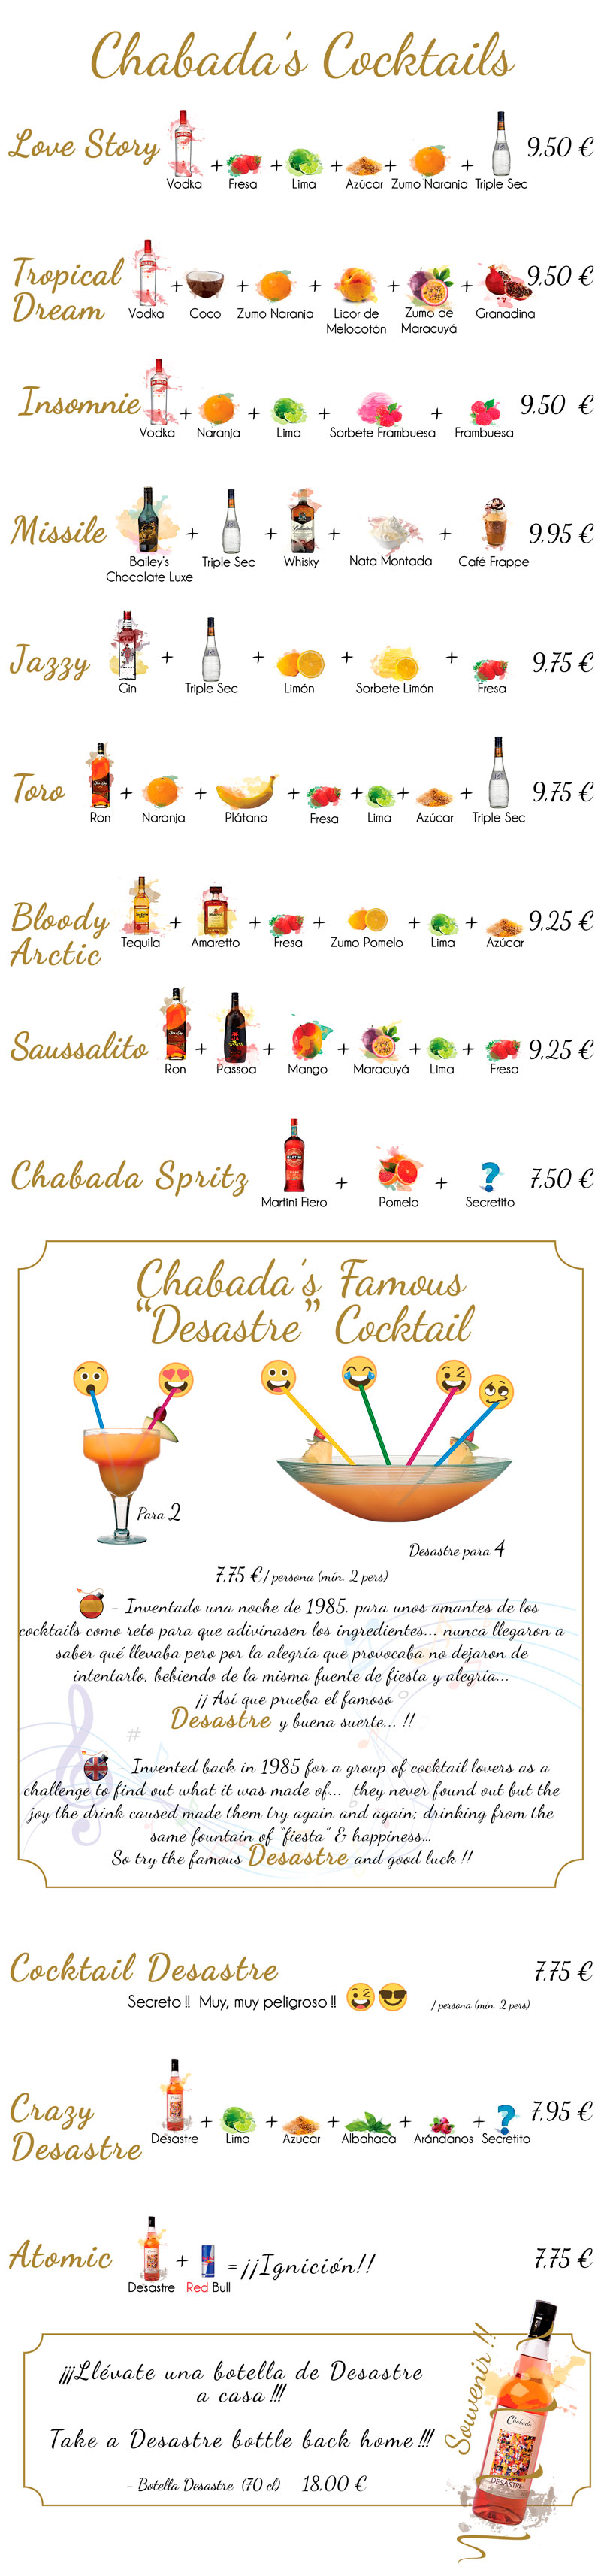 Cocktails1 Chabada